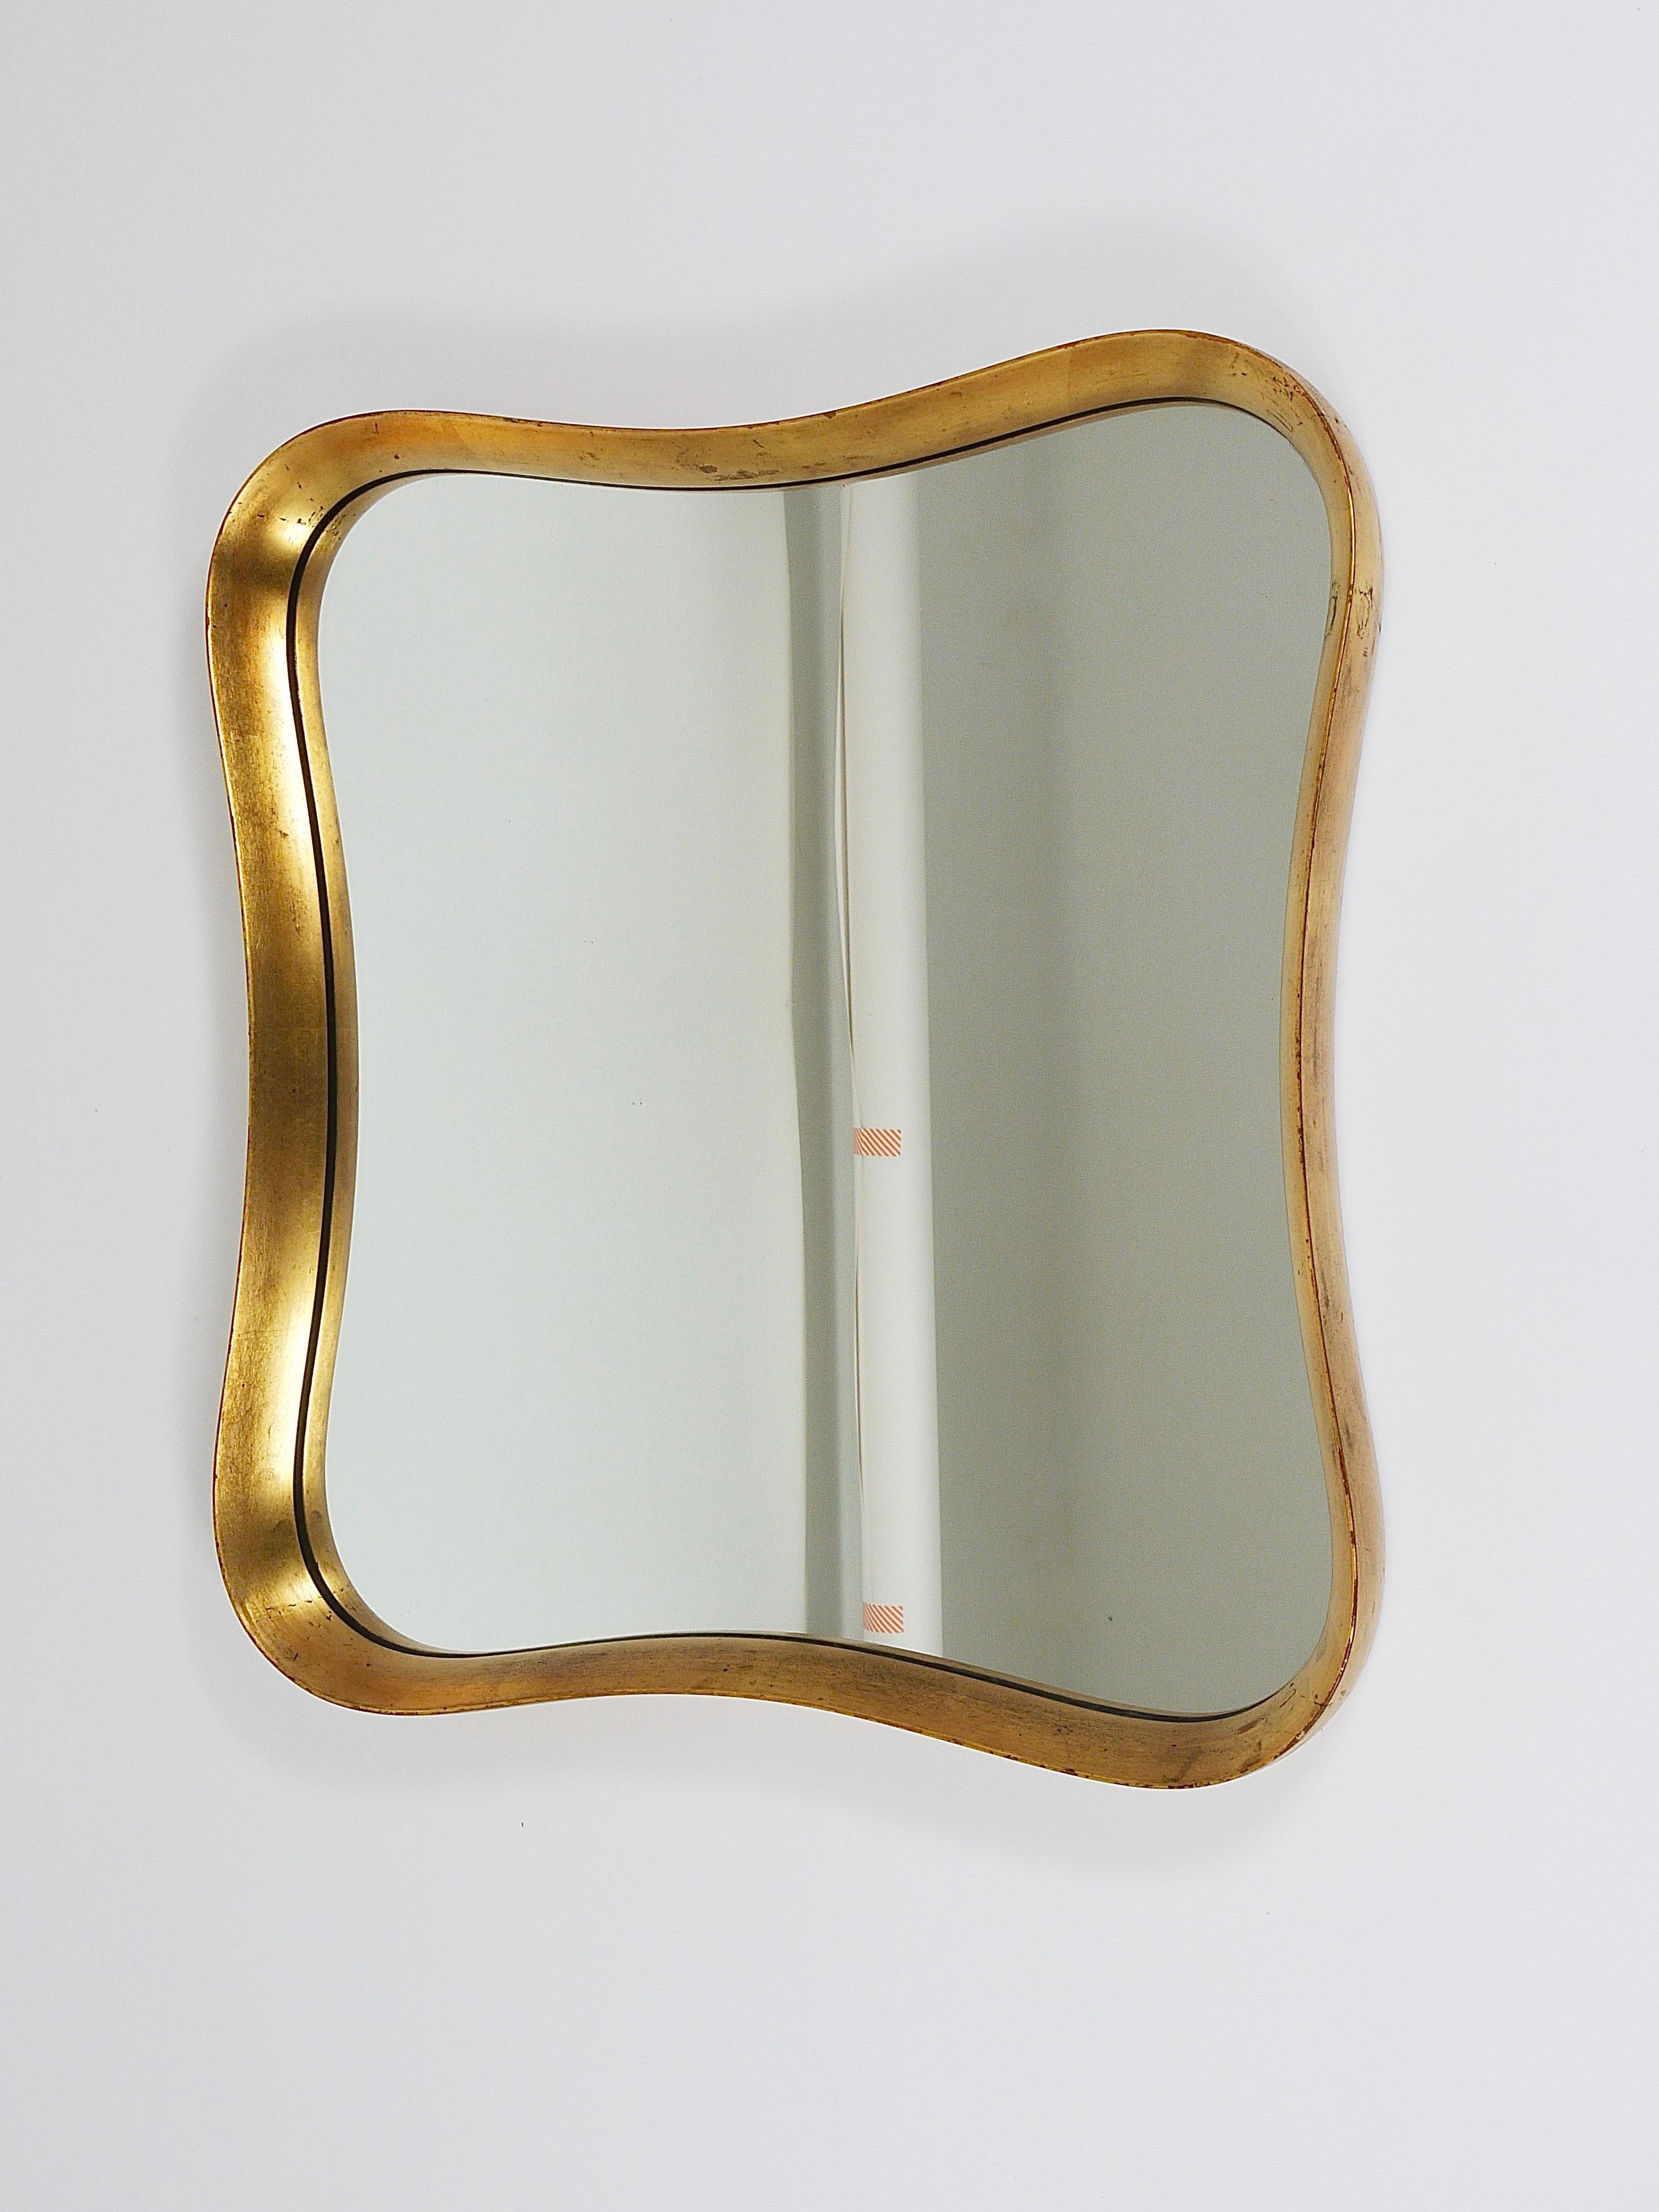 Gio Ponti Style Gilt Wood Mirror by Max Welz Vienna, Austria, 1940s For Sale 4